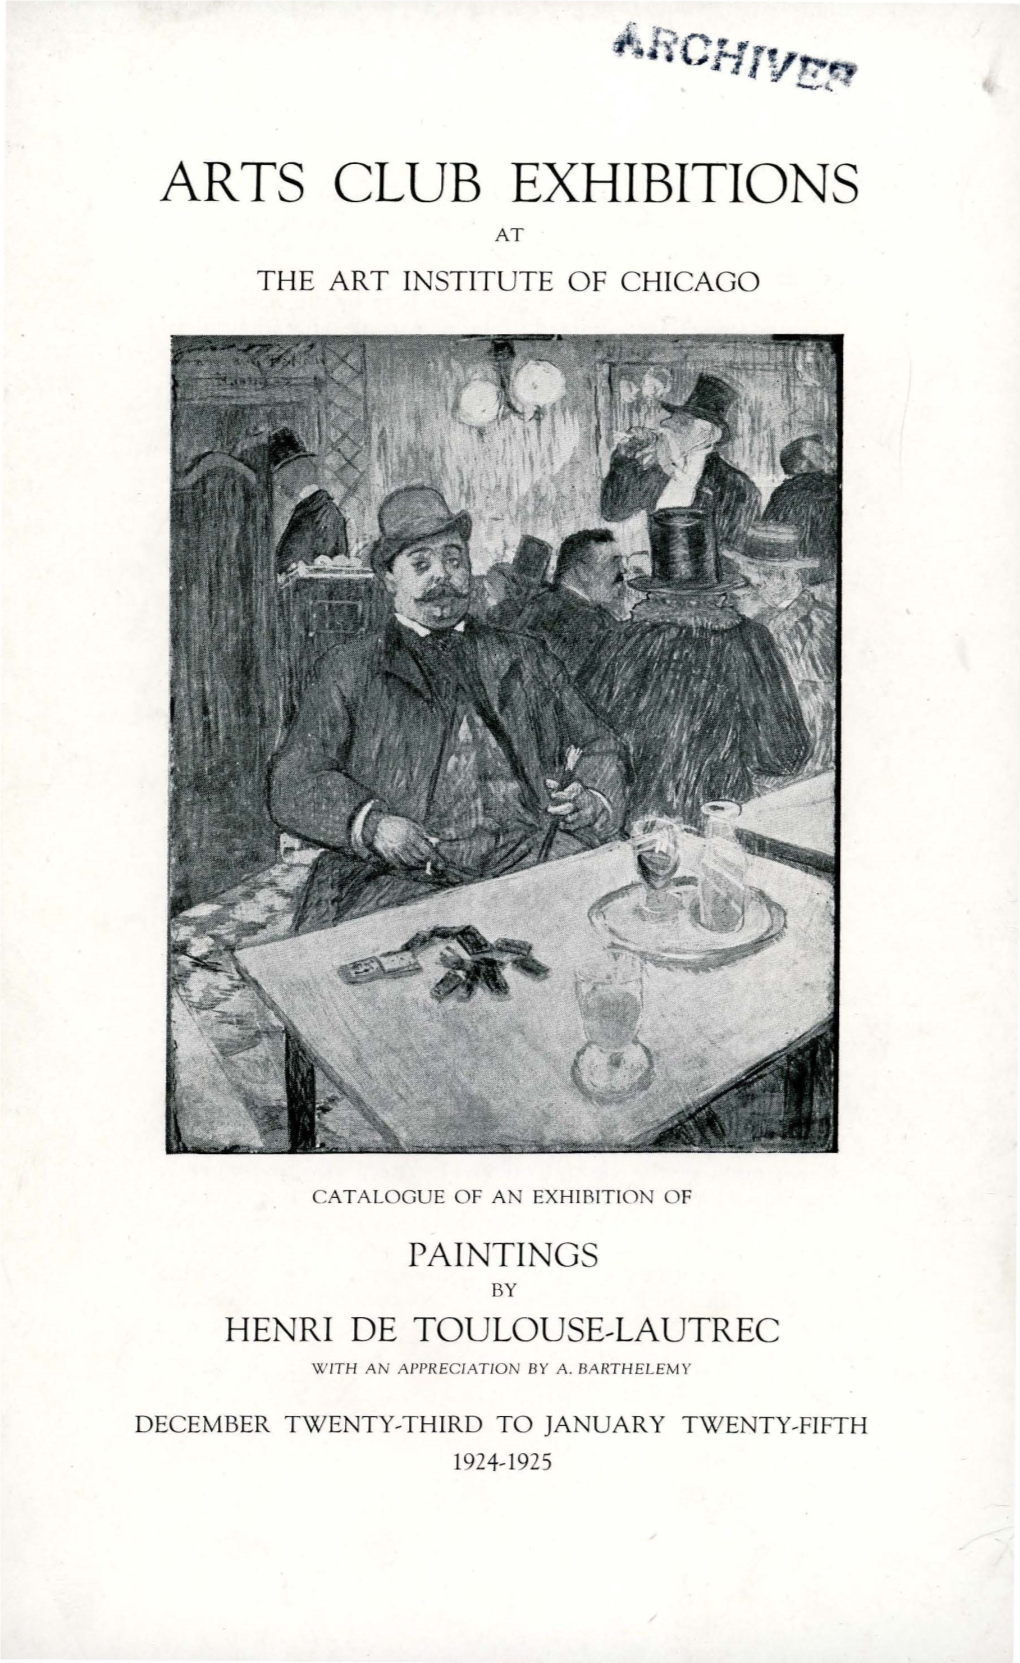 Catalogue of an Exhibition of Paintings by Henri De Toulouse-Lautrec